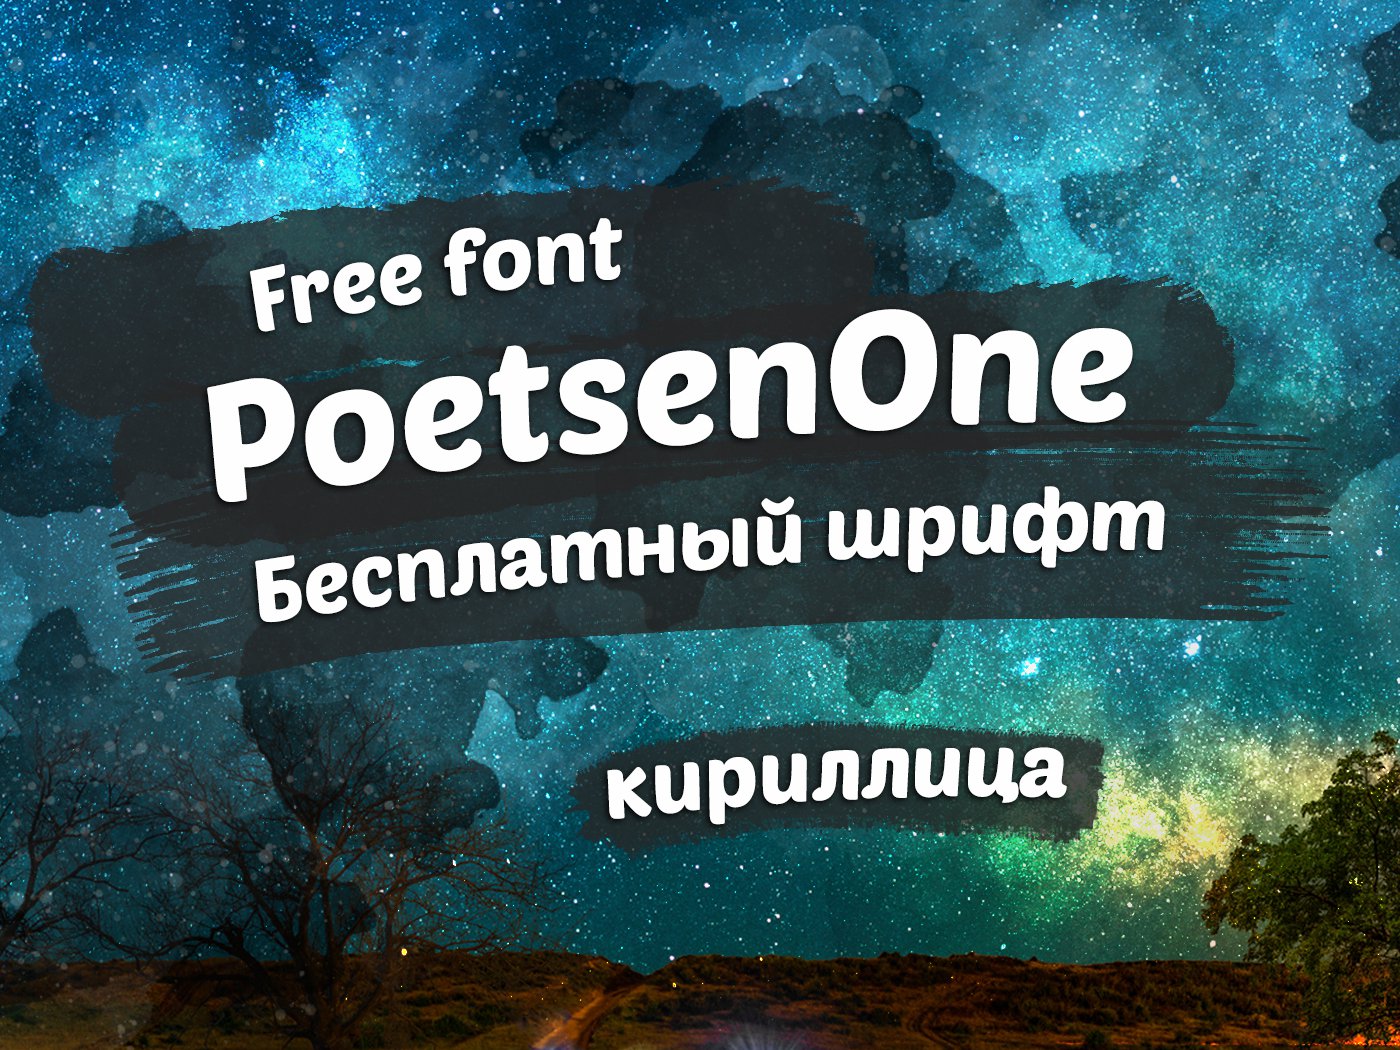 Poetsen One Font